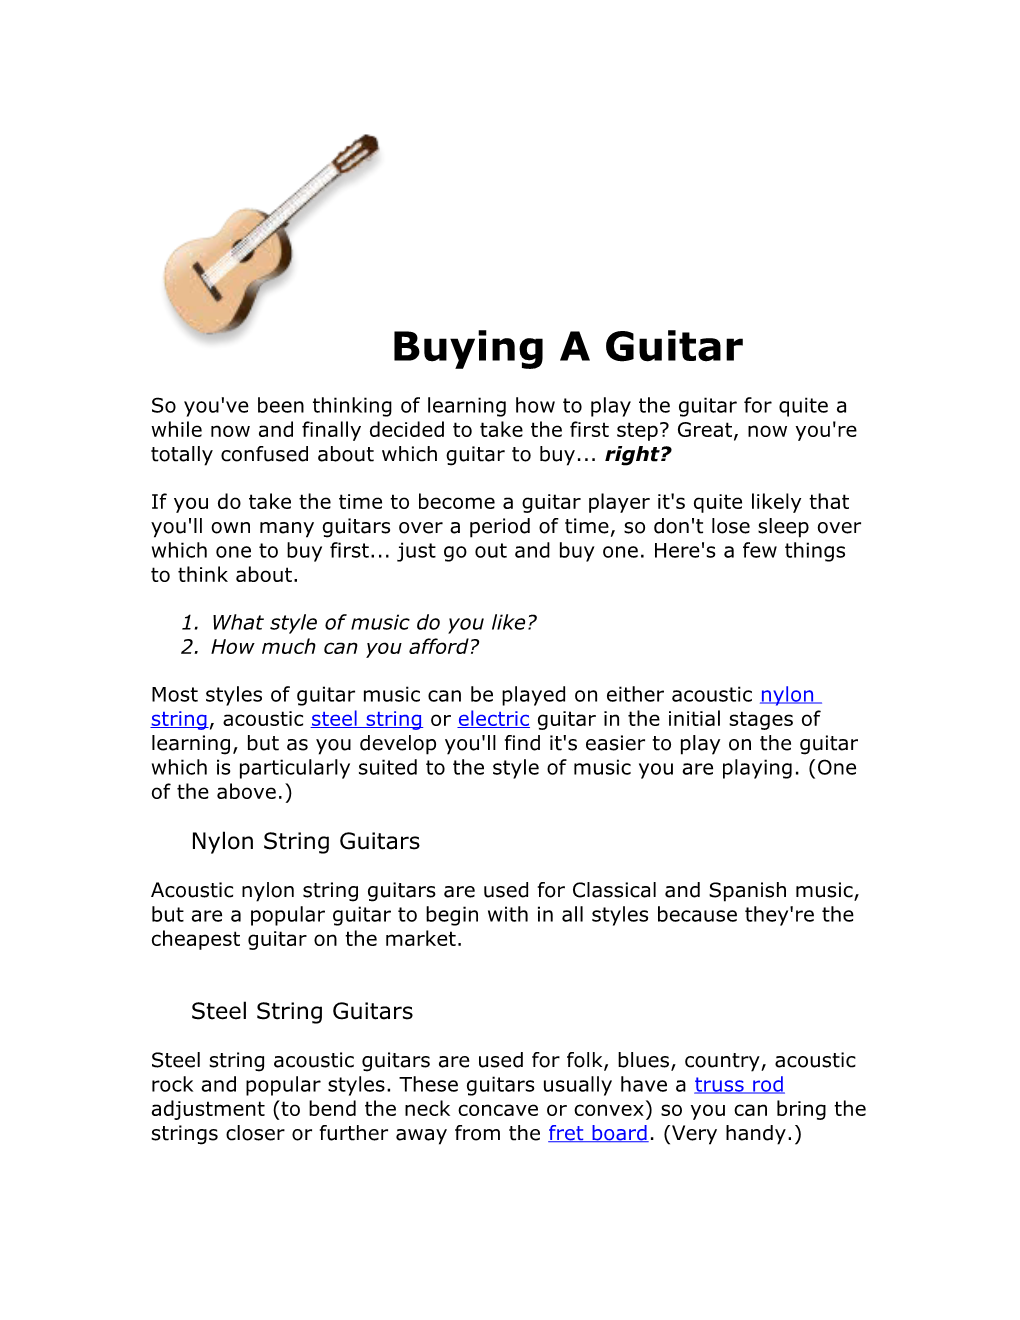 Buying a Guitar